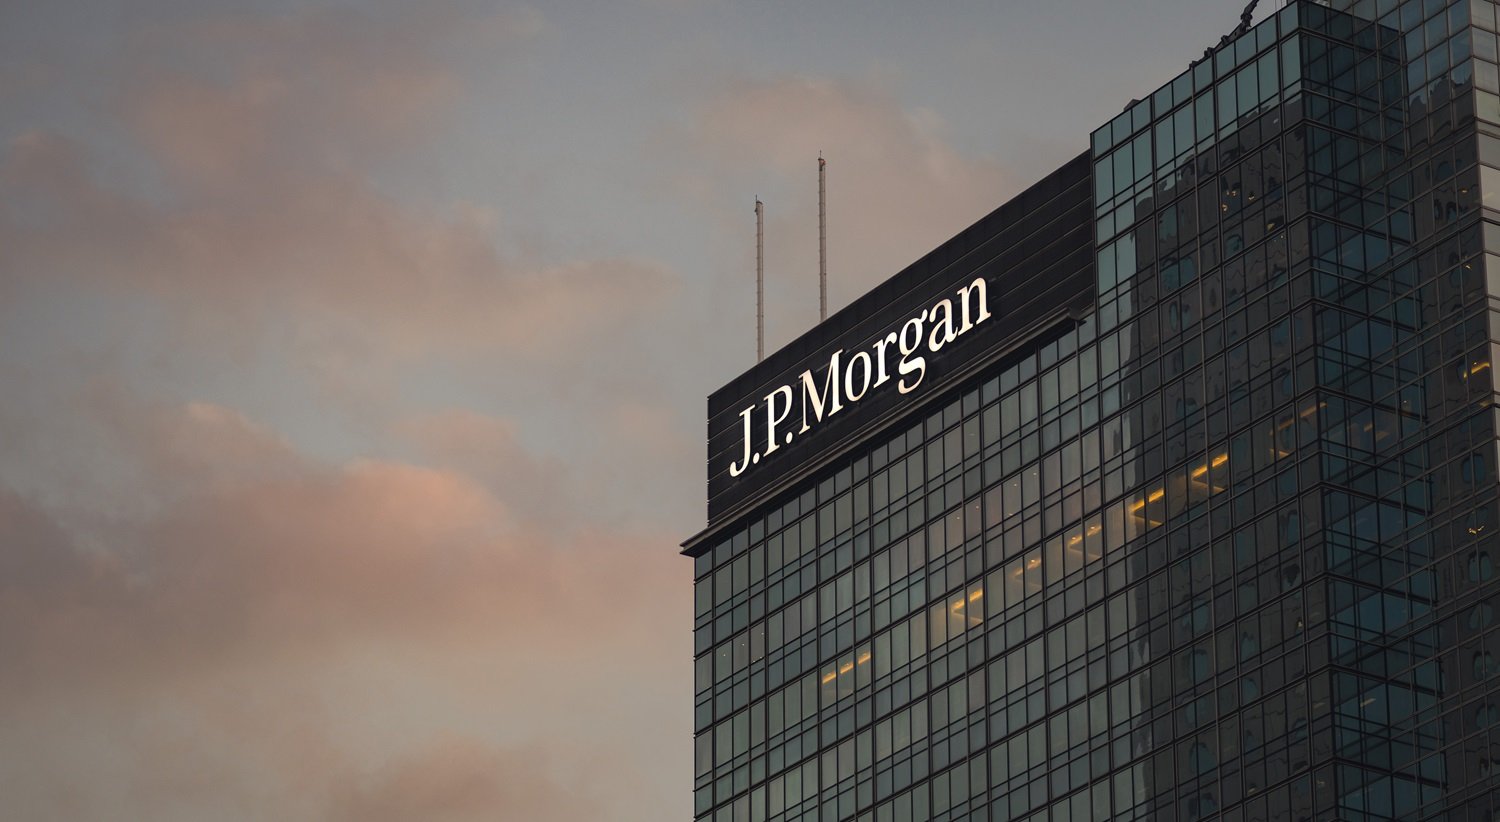 A JPMorgan building with the companys logo